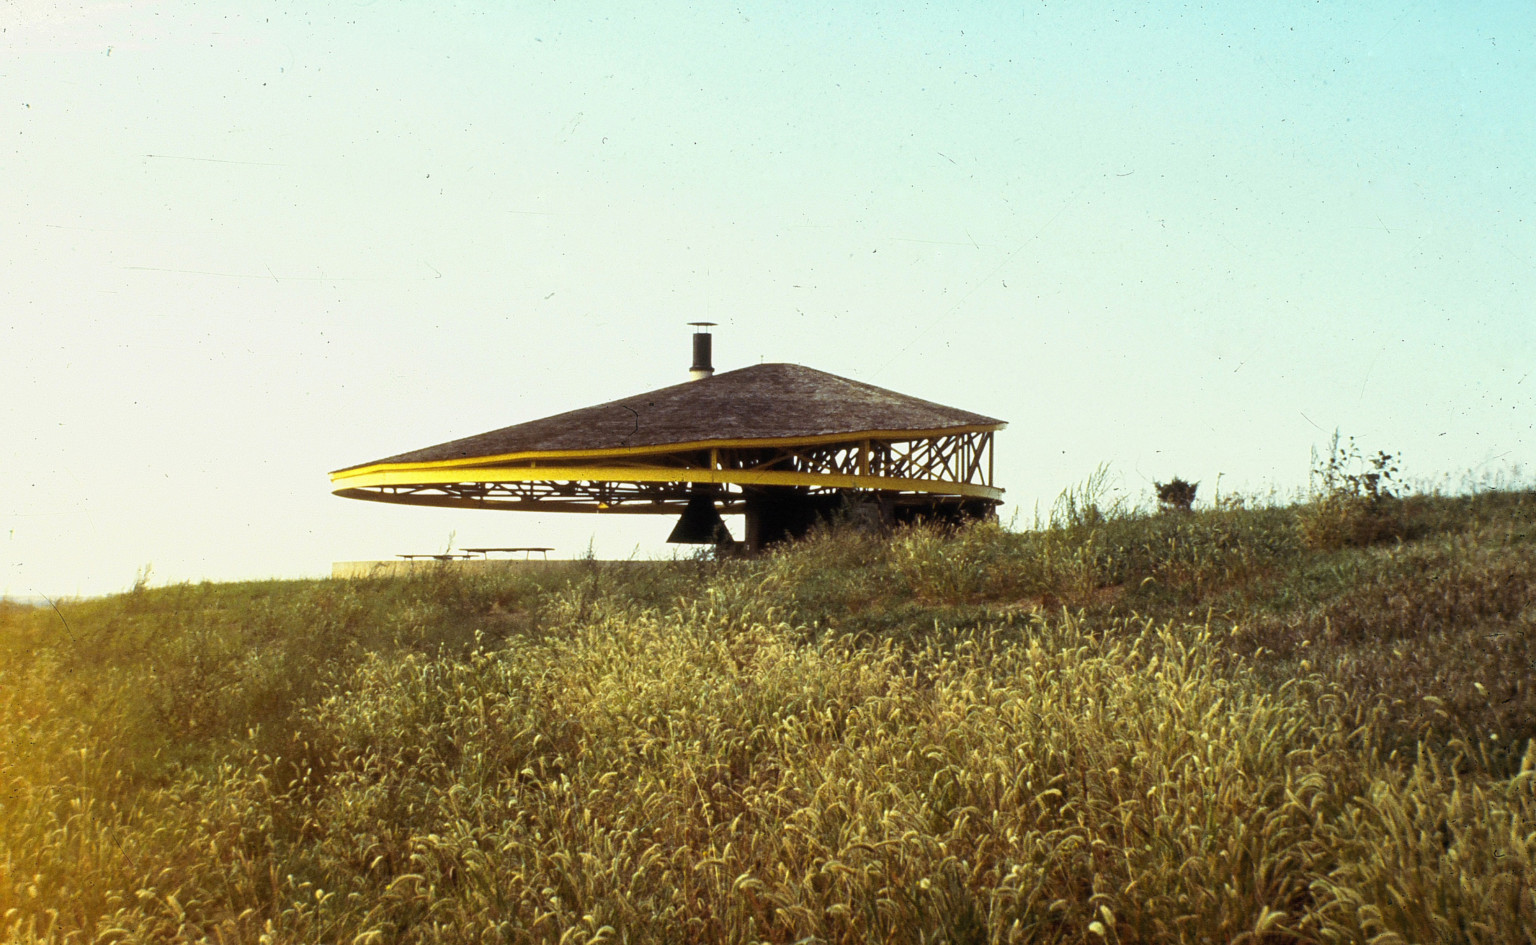 Black Elk-Neihardt Park pavilion, an asymmetrical yellow and black structure, in a grassy field in Nebraska